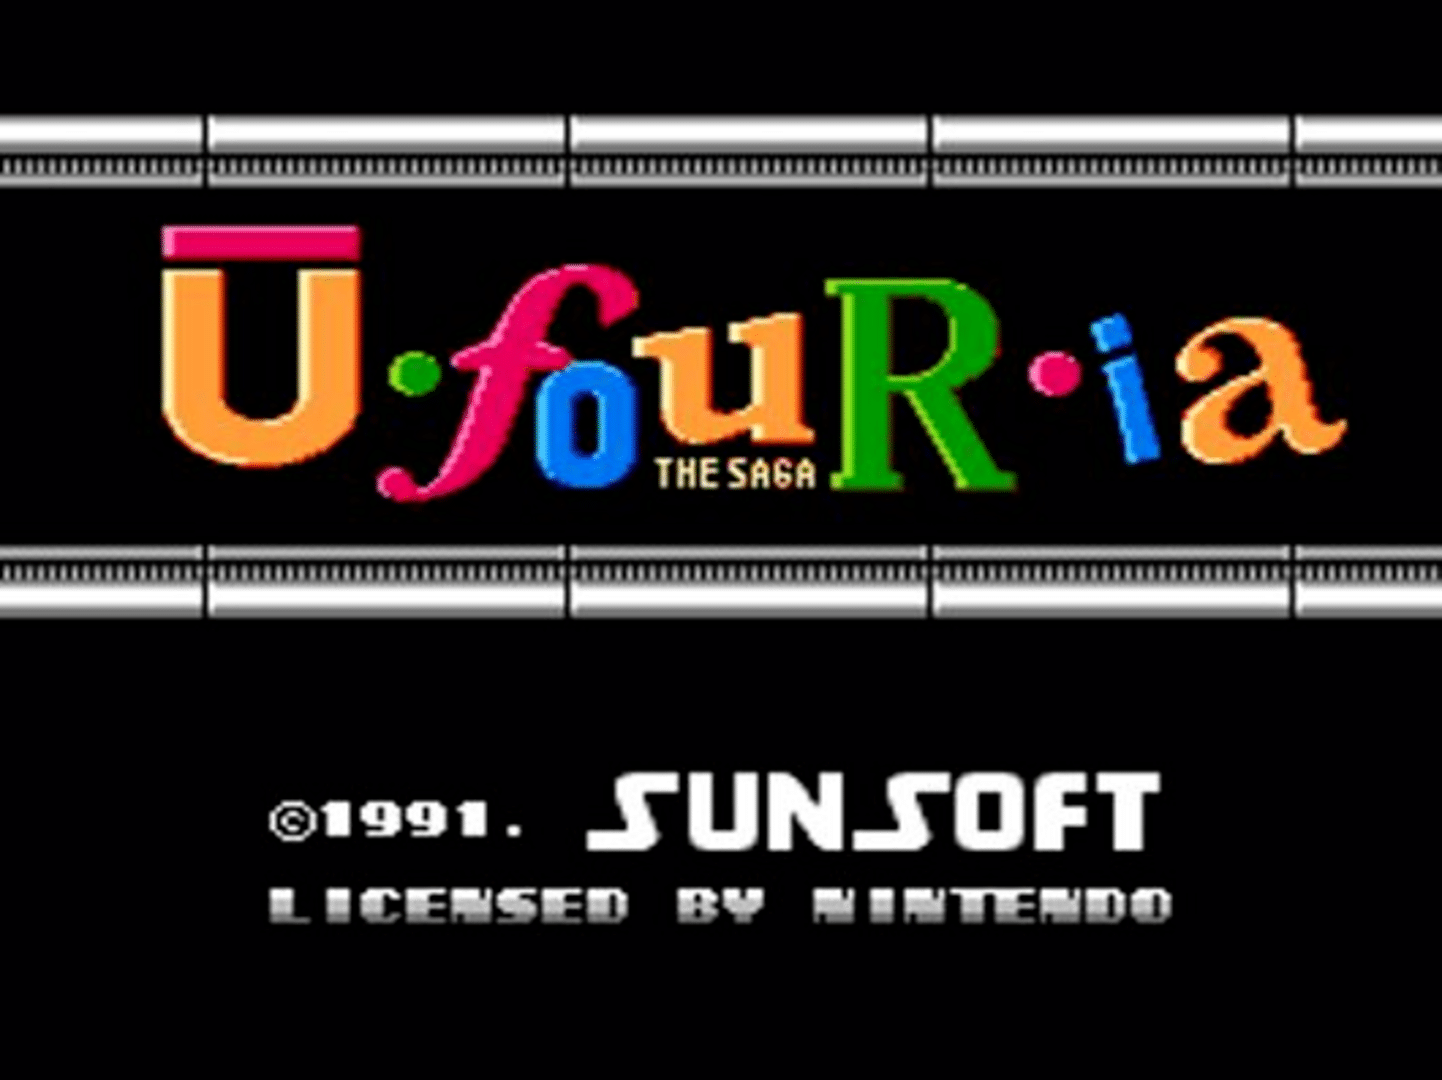 Ufouria: The Saga screenshot